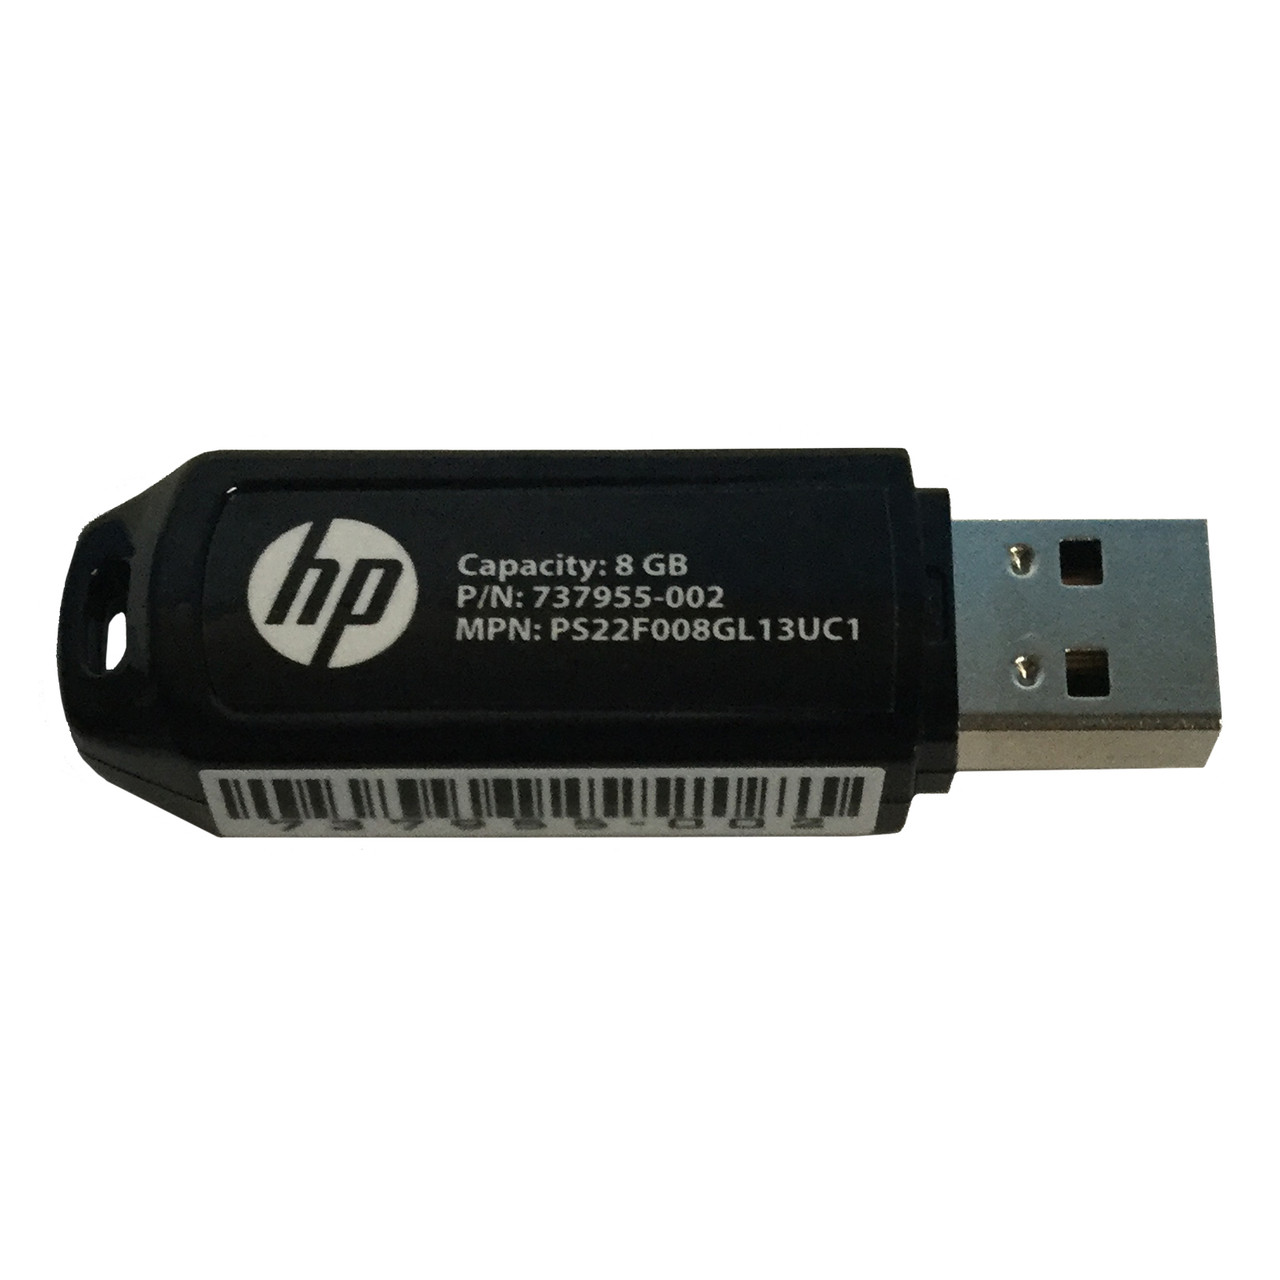 HPe 737955-002 8GB USB Flash Media Key 743503-001